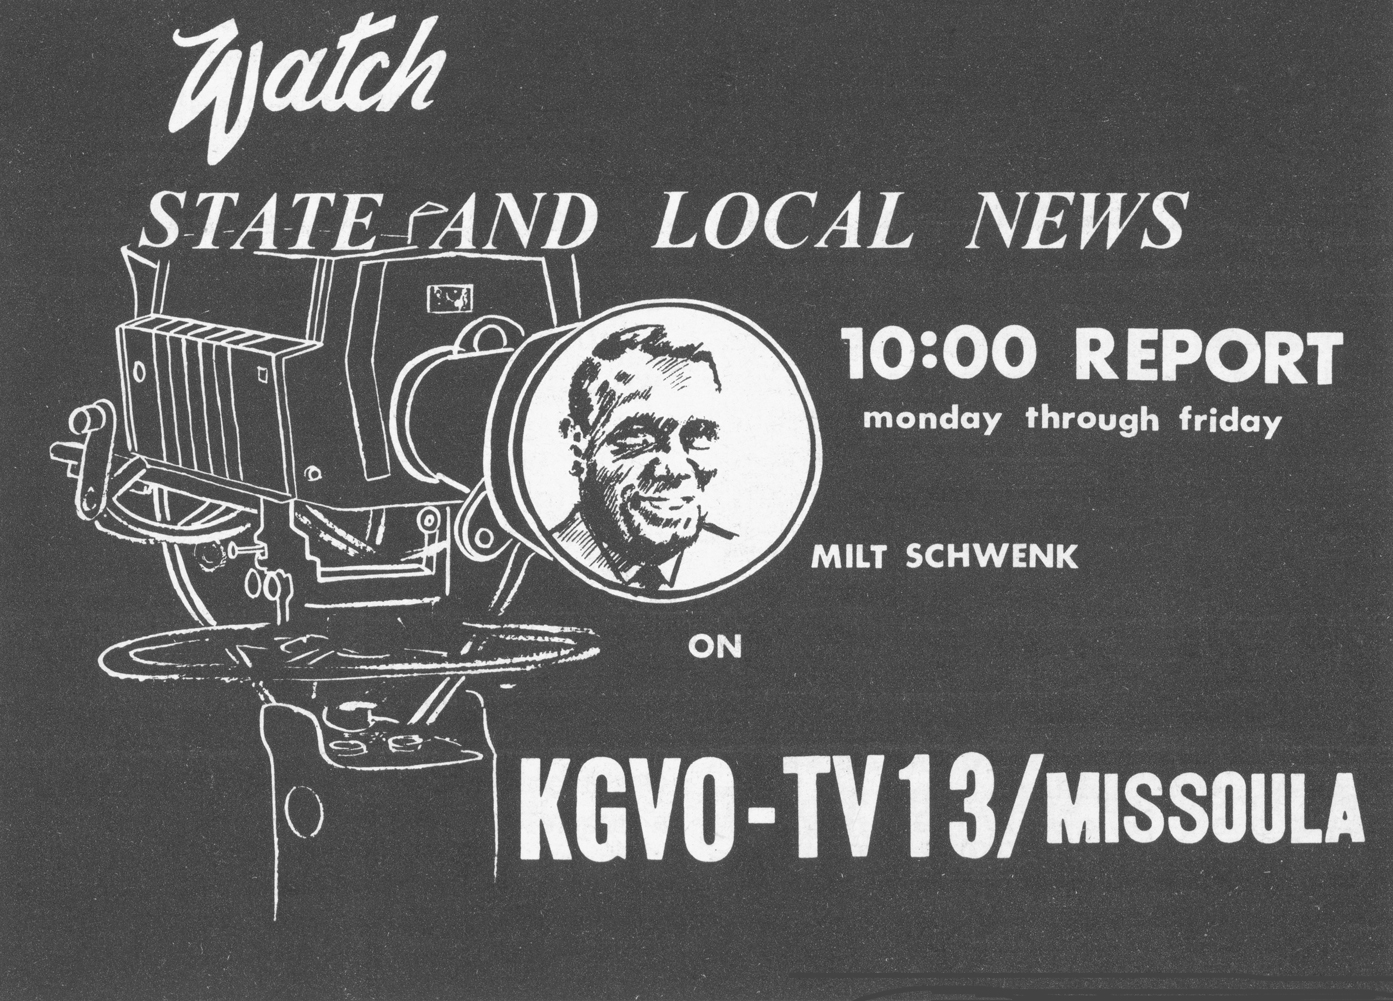 KGVO TV Channel 13 Missoula, Montana